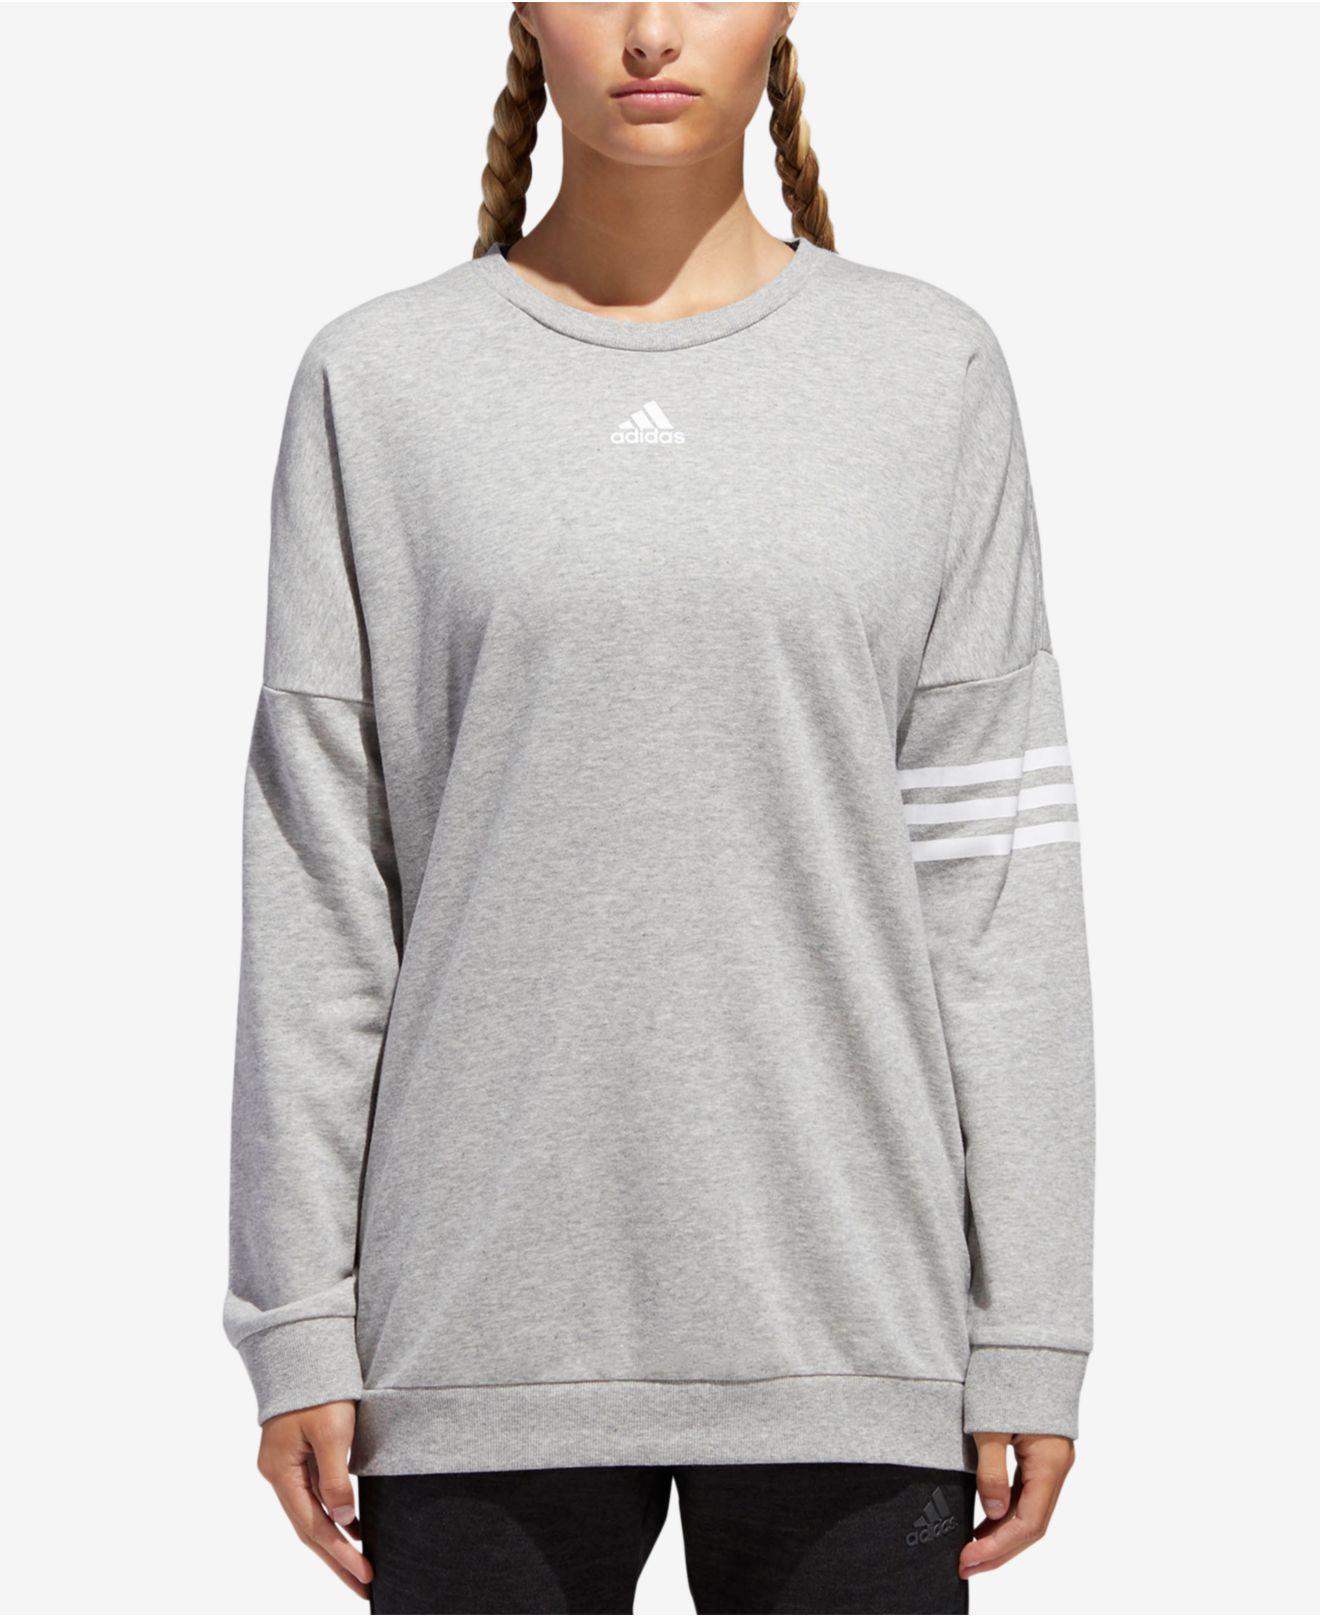 adidas Originals Cotton Relaxed Logo Sweatshirt in Gray - Lyst